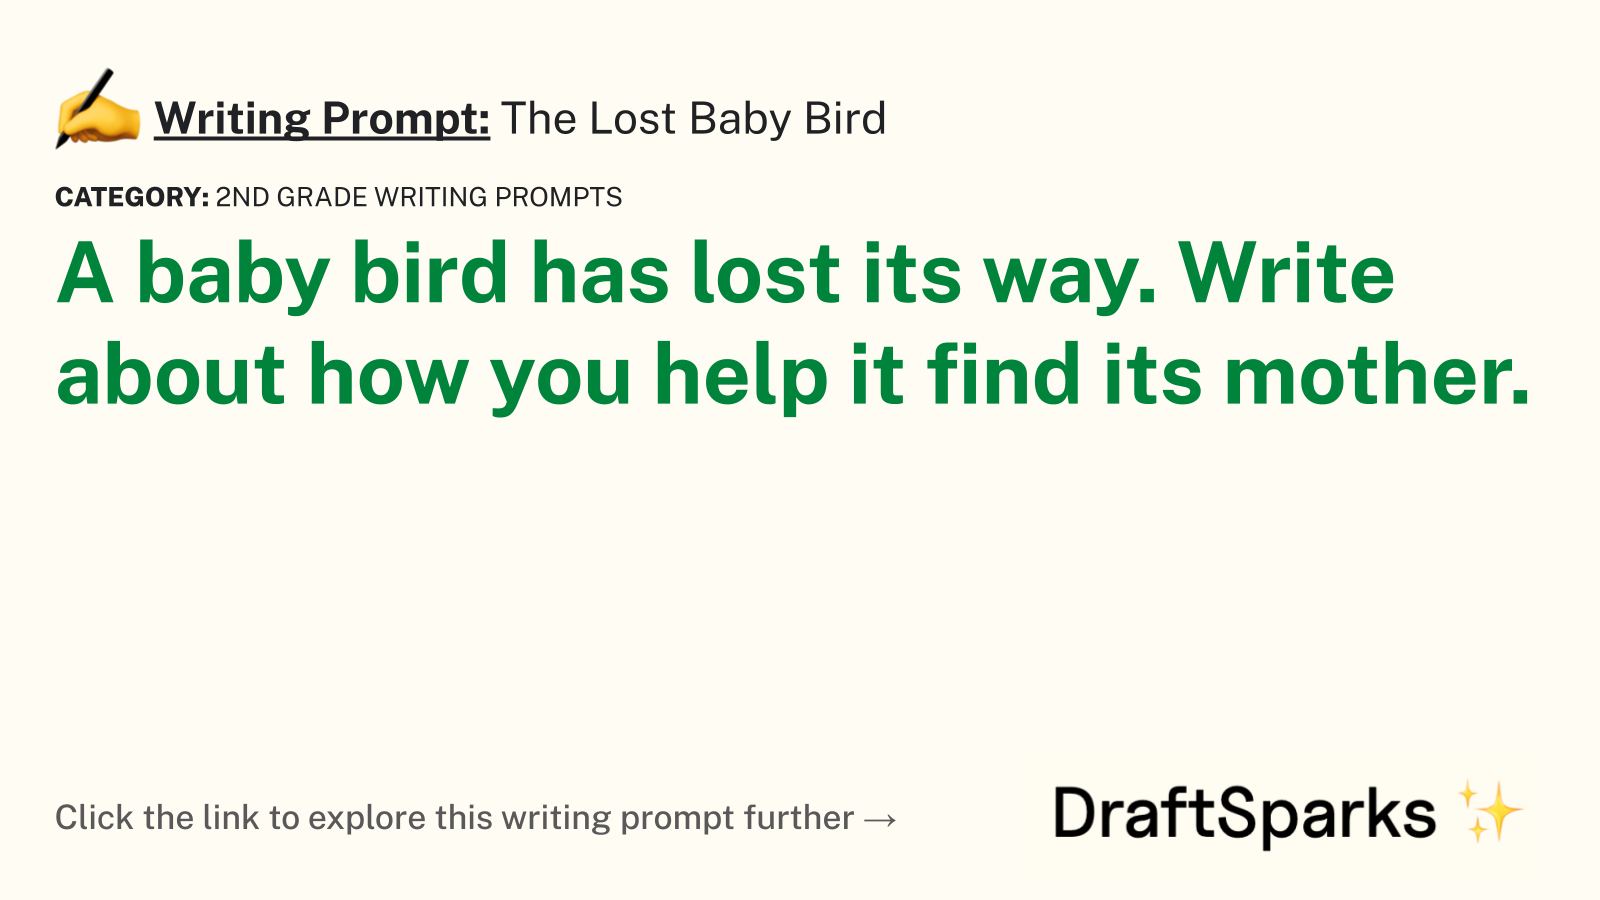 The Lost Baby Bird